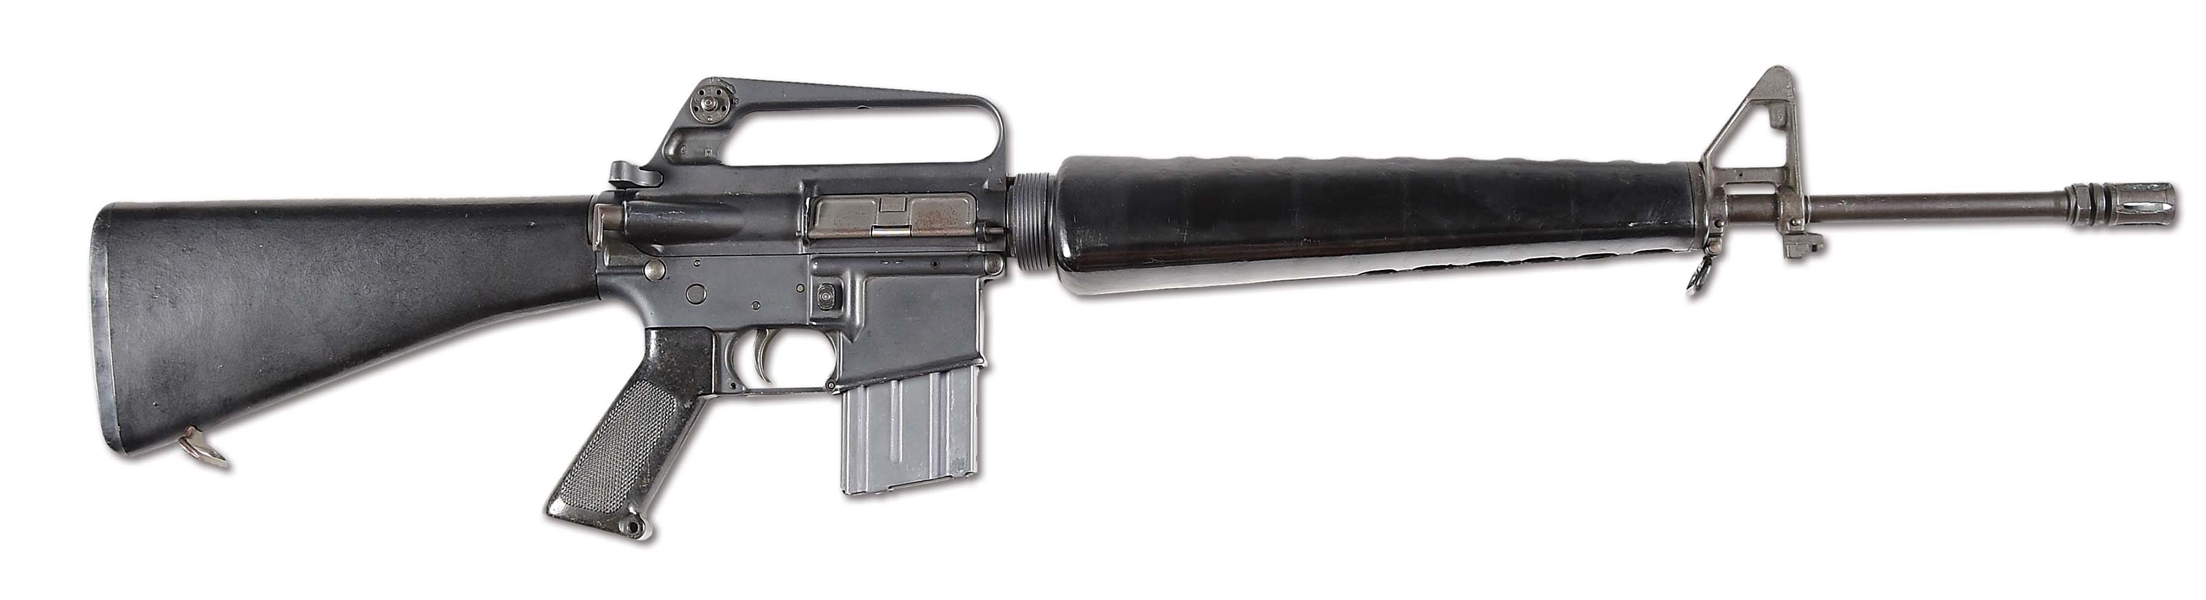 (N) BEAUTIFUL CLASSIC MILITARY CONFIGURATION COLT M16A1 MACHINE GUN (FULLY TRANSFERABLE).